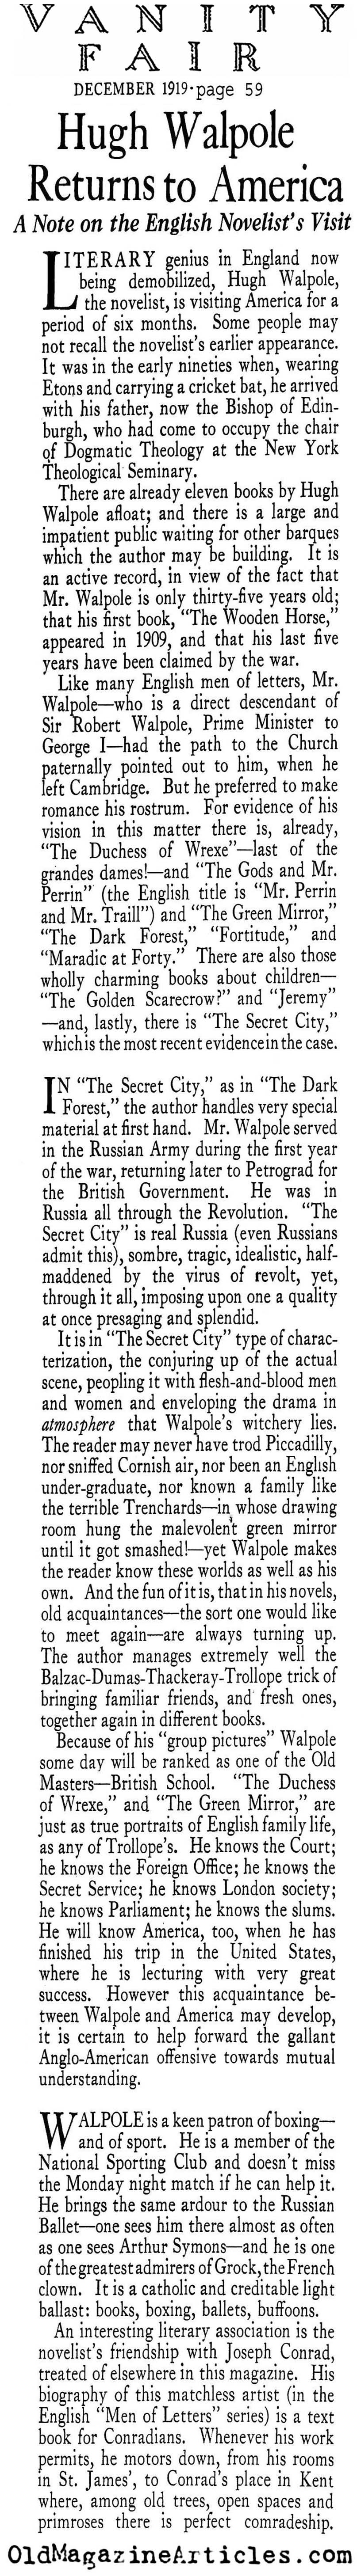 Hugh Walpole Returns to America (Vanity Fair, 1919) 